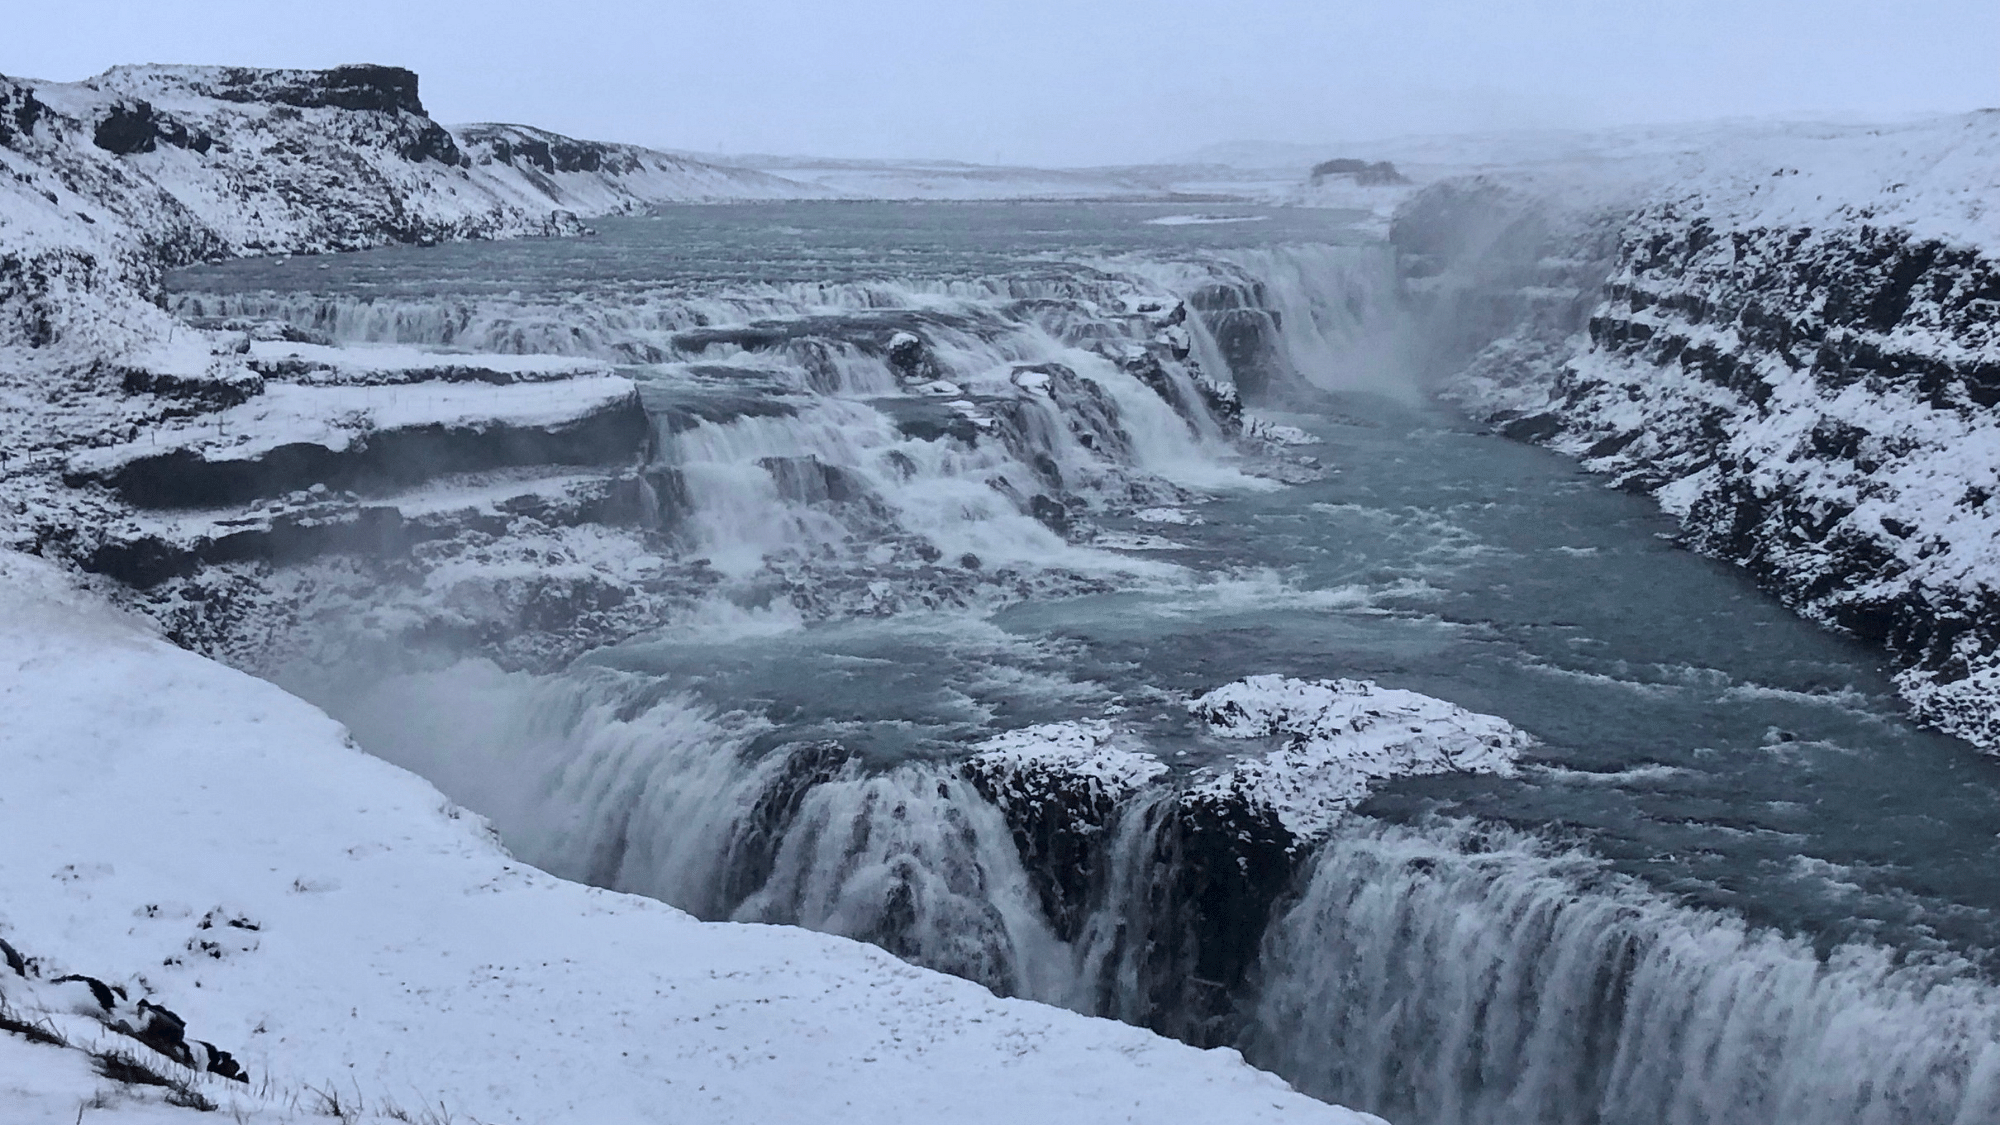 The Gullfoss Waterfall is absolutely breathtaking.